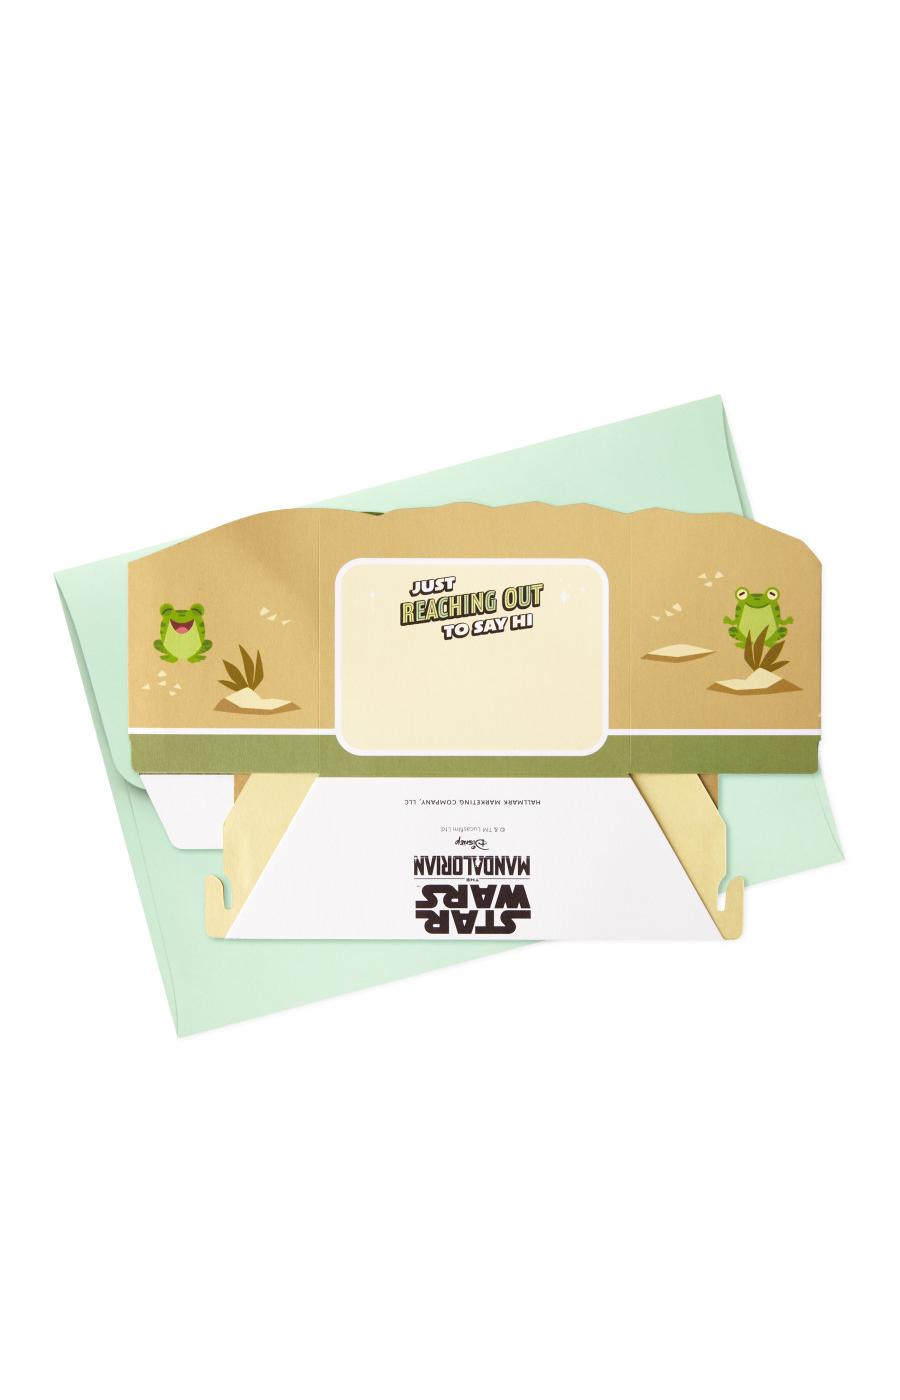 Hallmark Paper Wonder Reaching Out Star Wars Baby Yoda Pop Up Card - E64; image 2 of 5